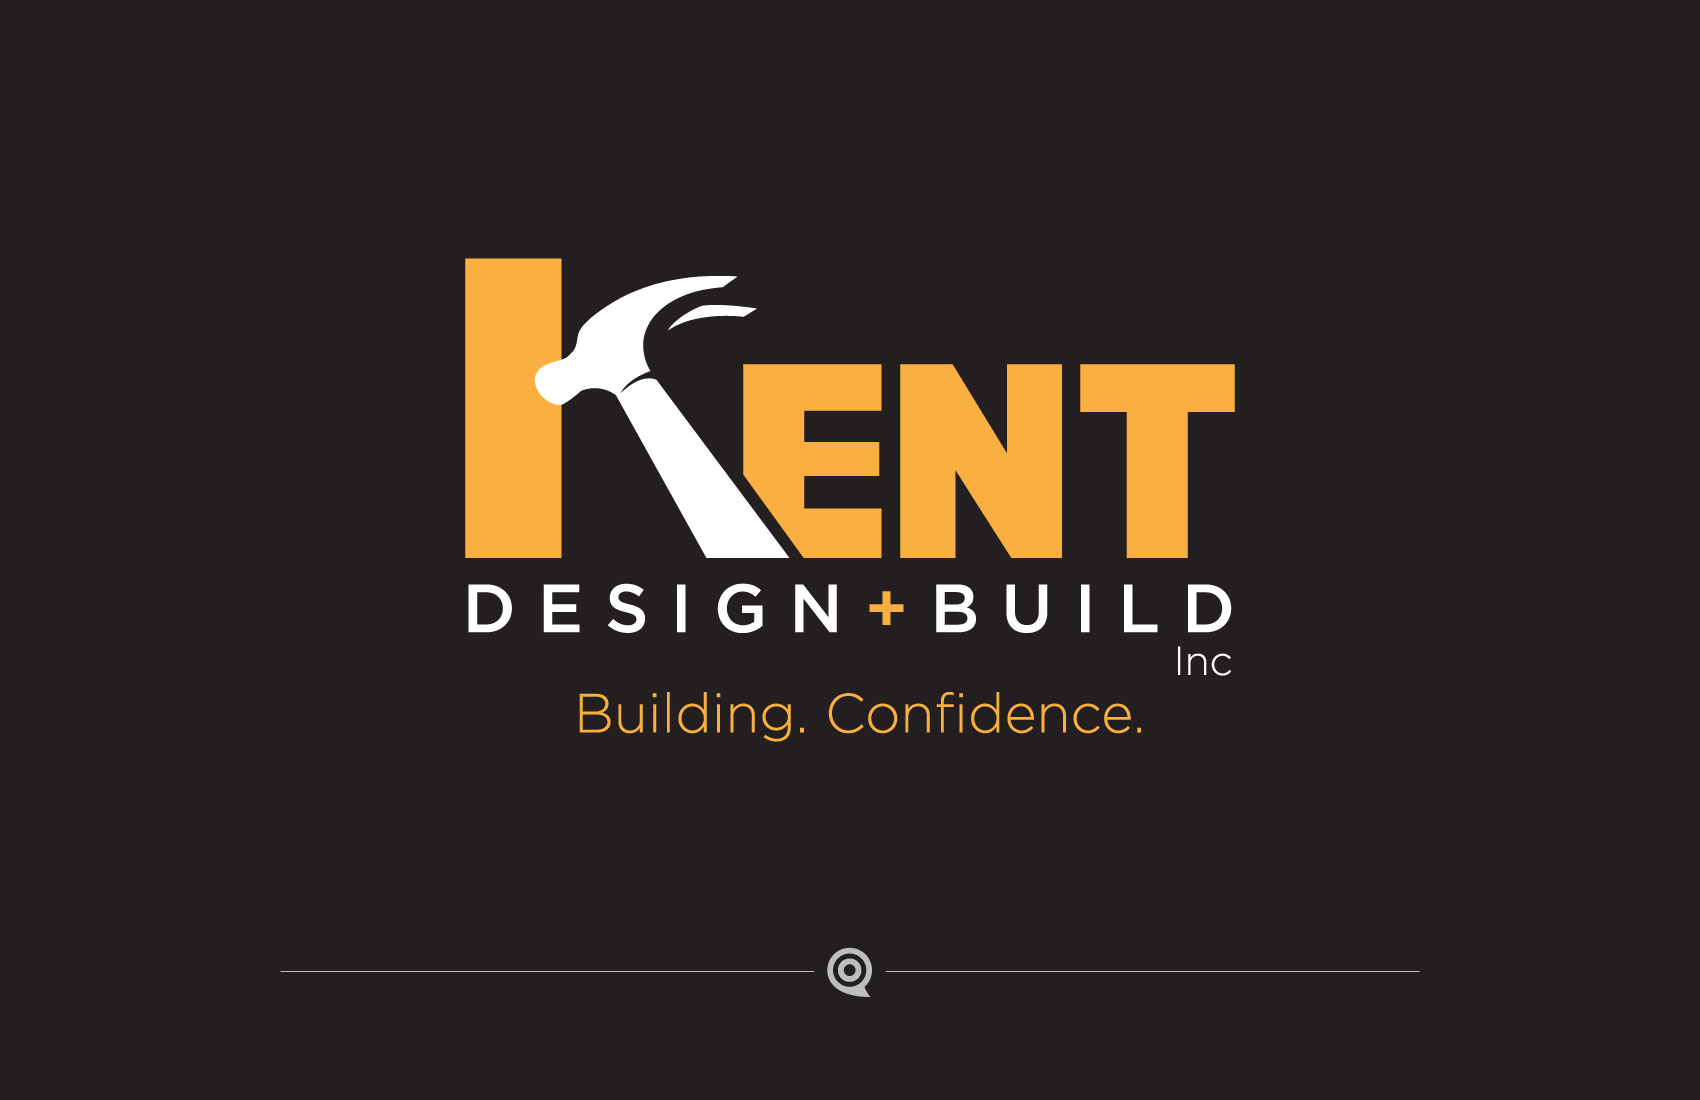 Kent Church Design Builders | Building. Confidence.